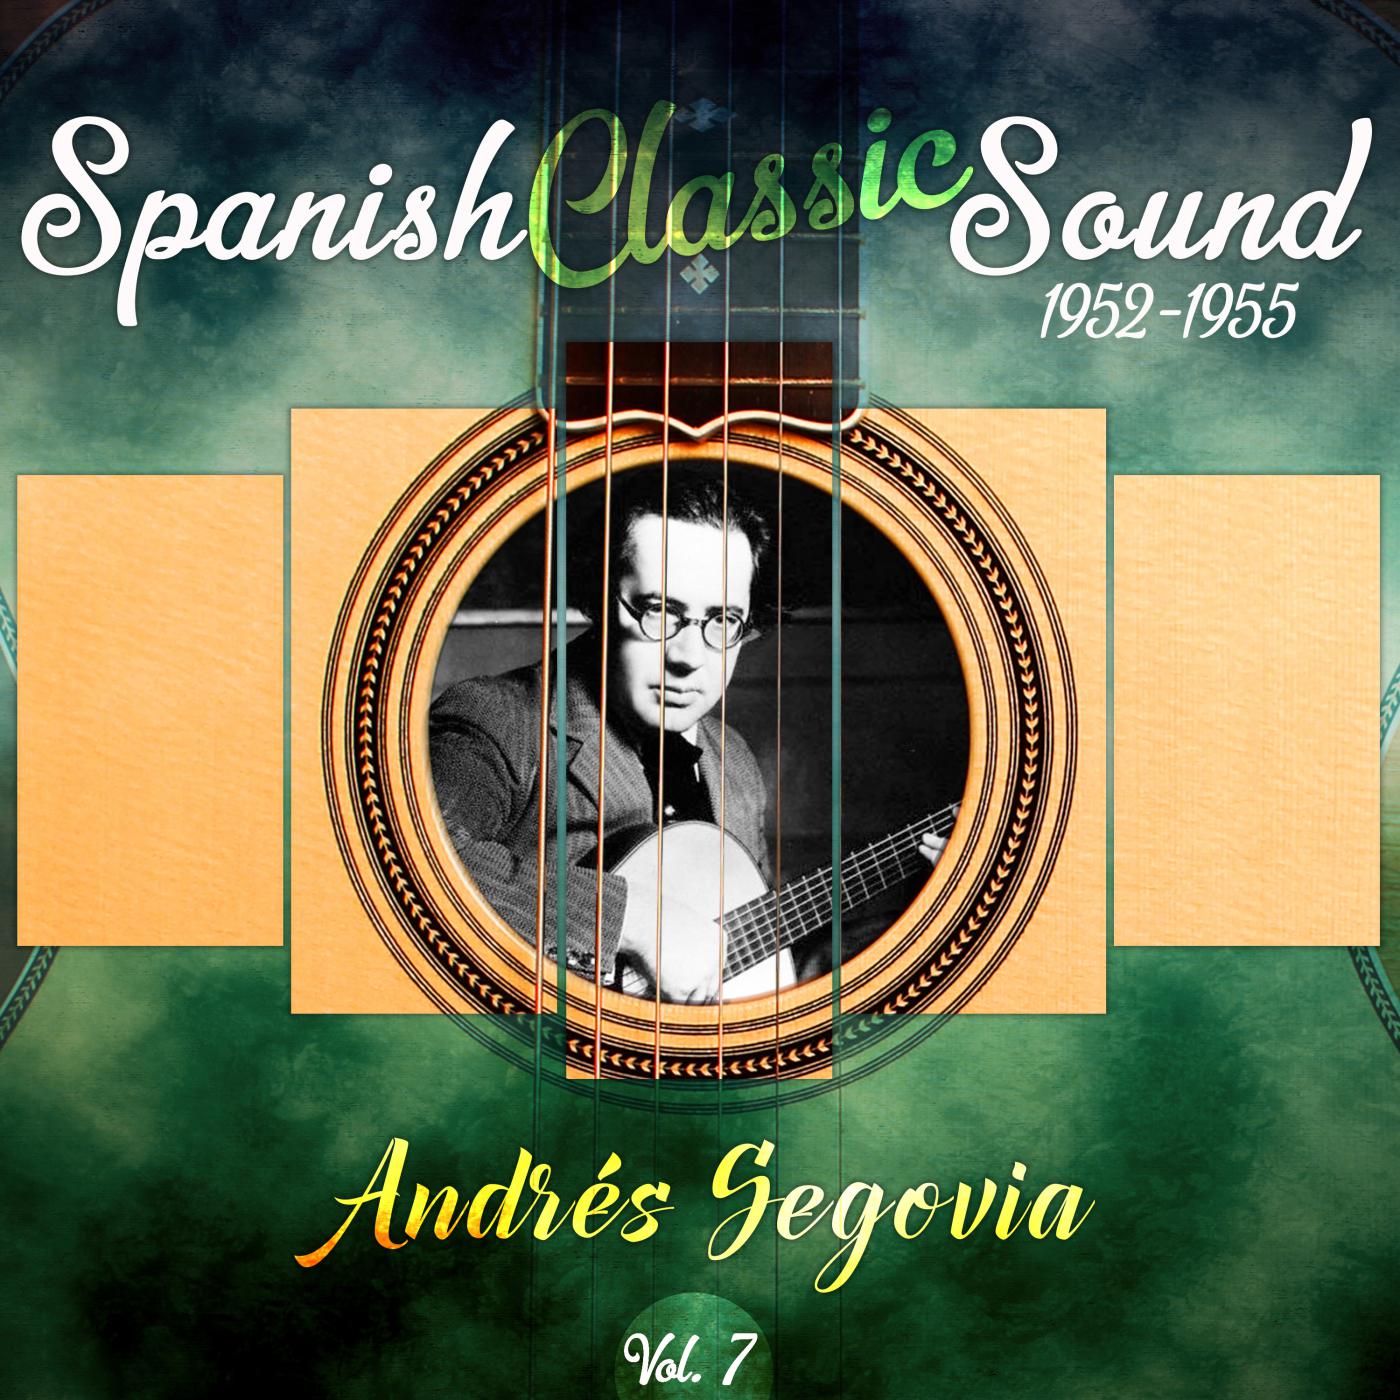 Spanish Classic Sound, Vol. 7 (1952 - 1955)